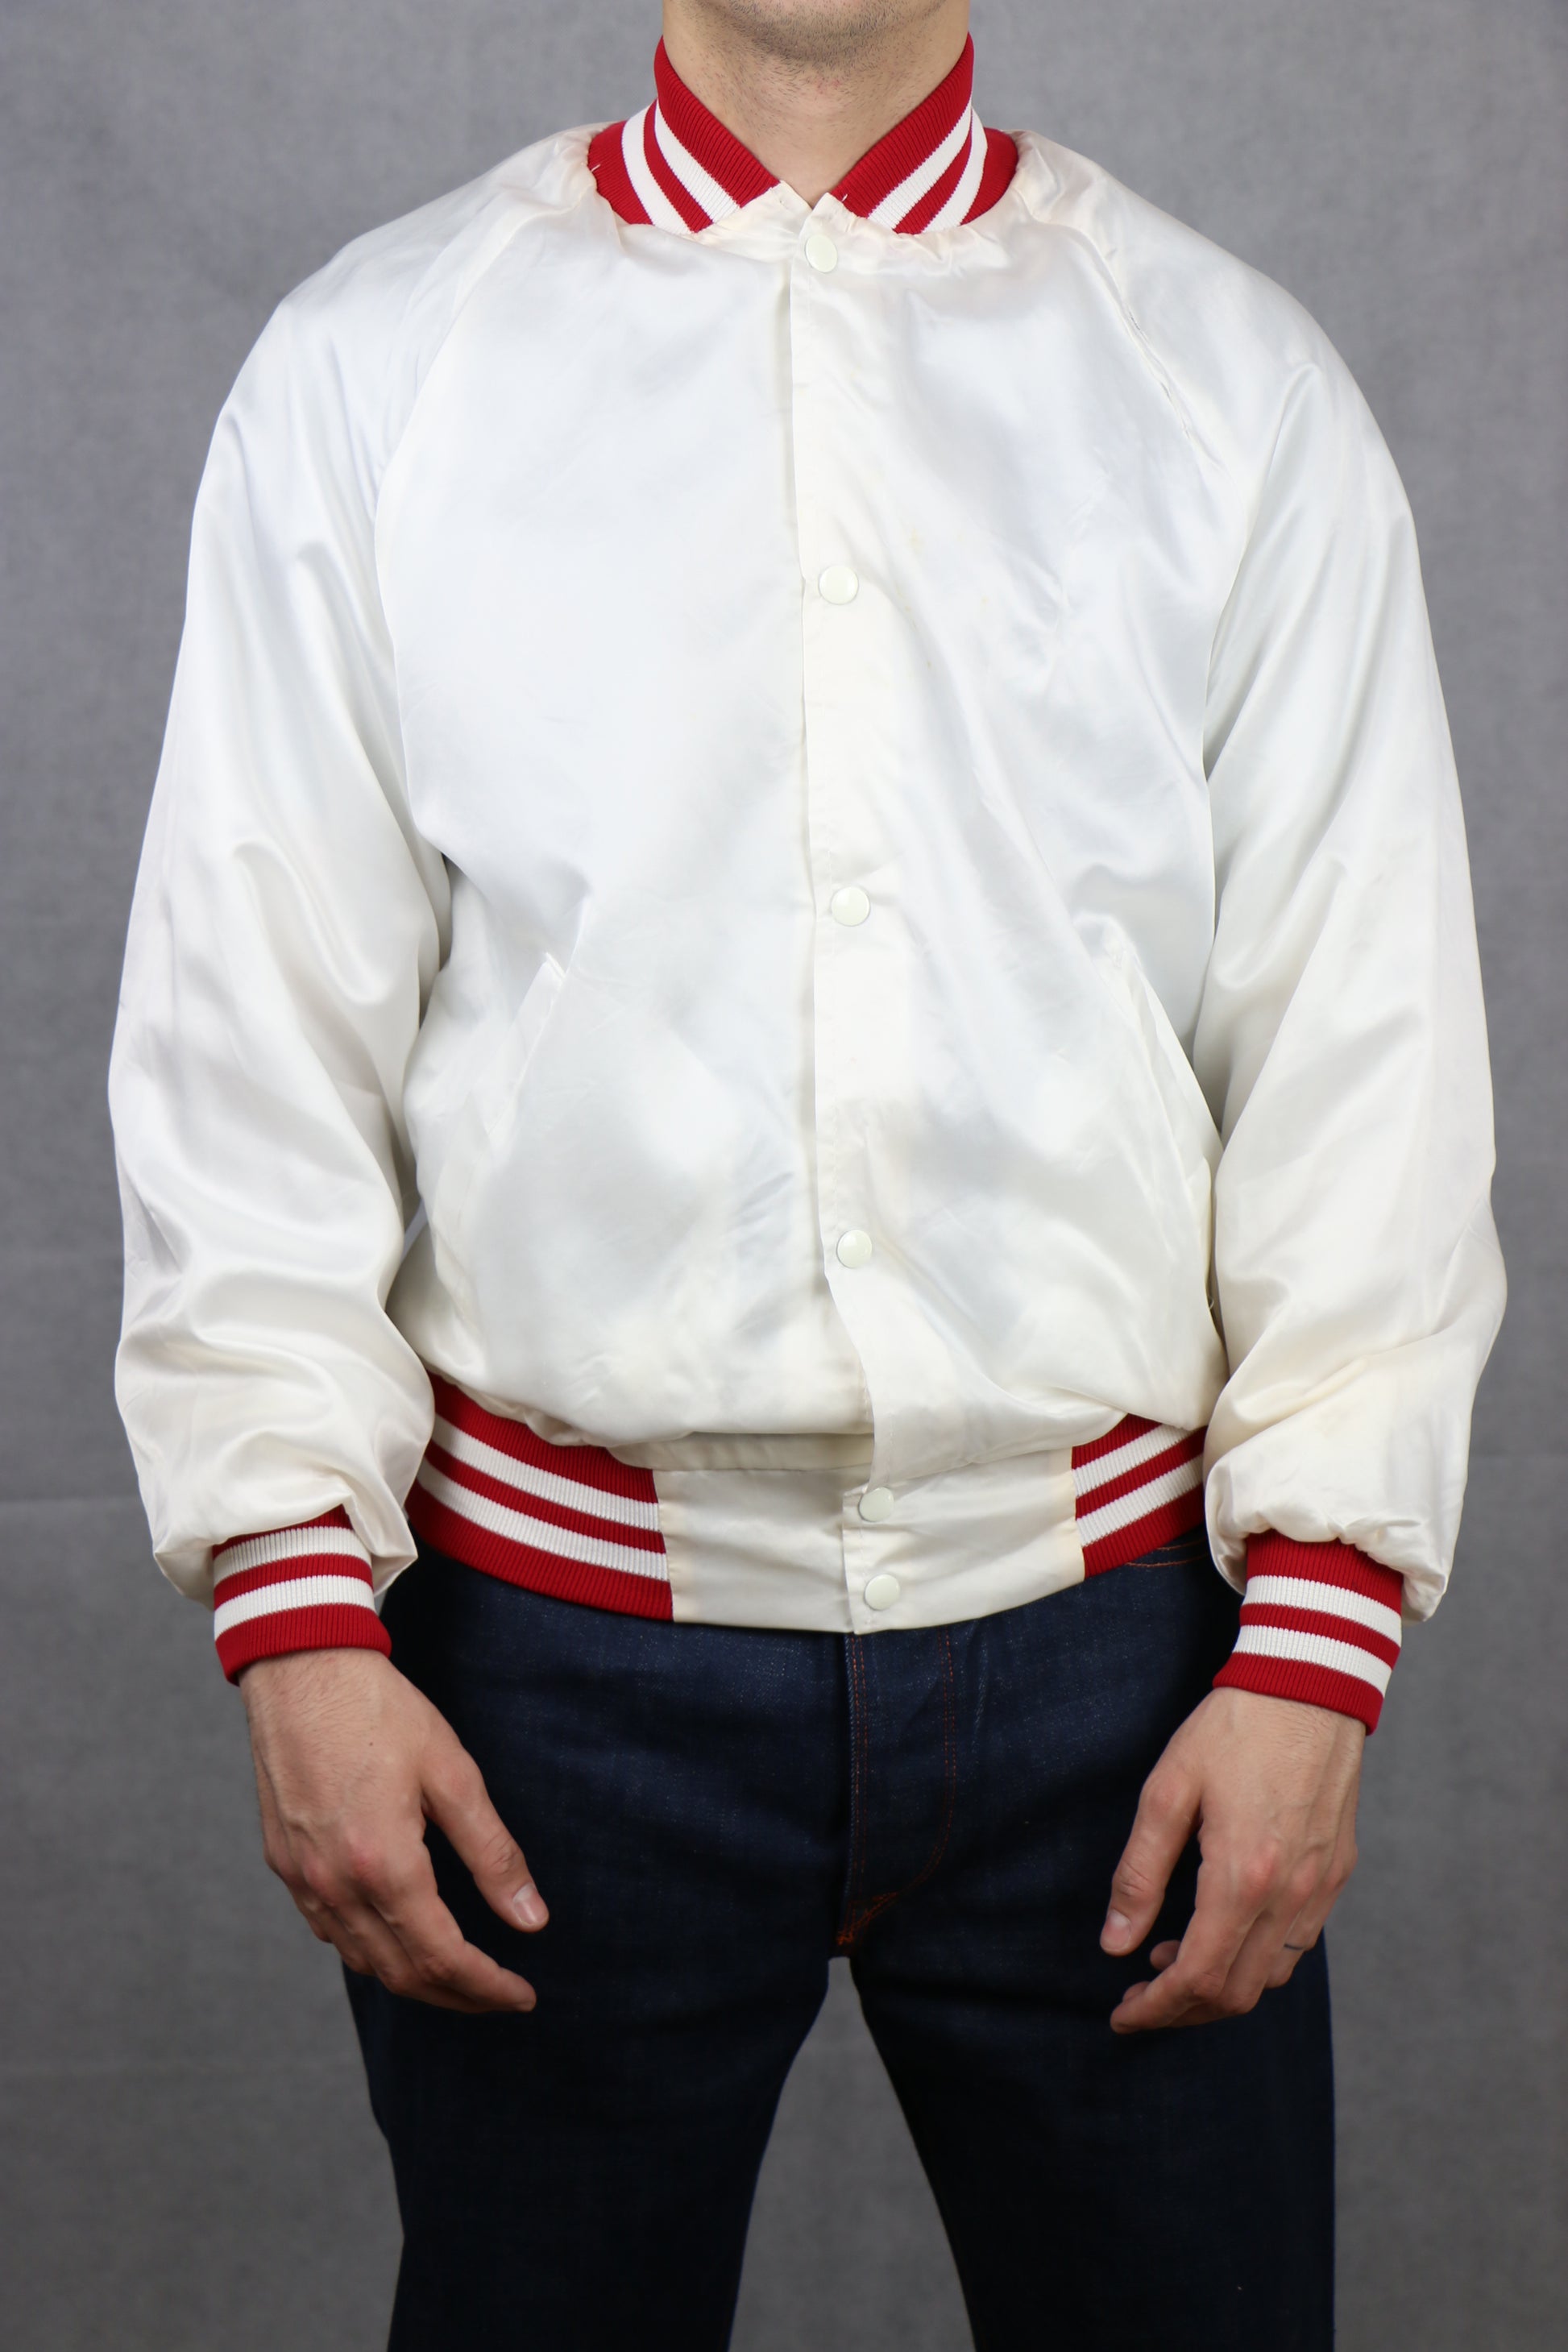 Satin White Bomber Jacket (Joplin, Missouri) - vintage clothing clochard92.com